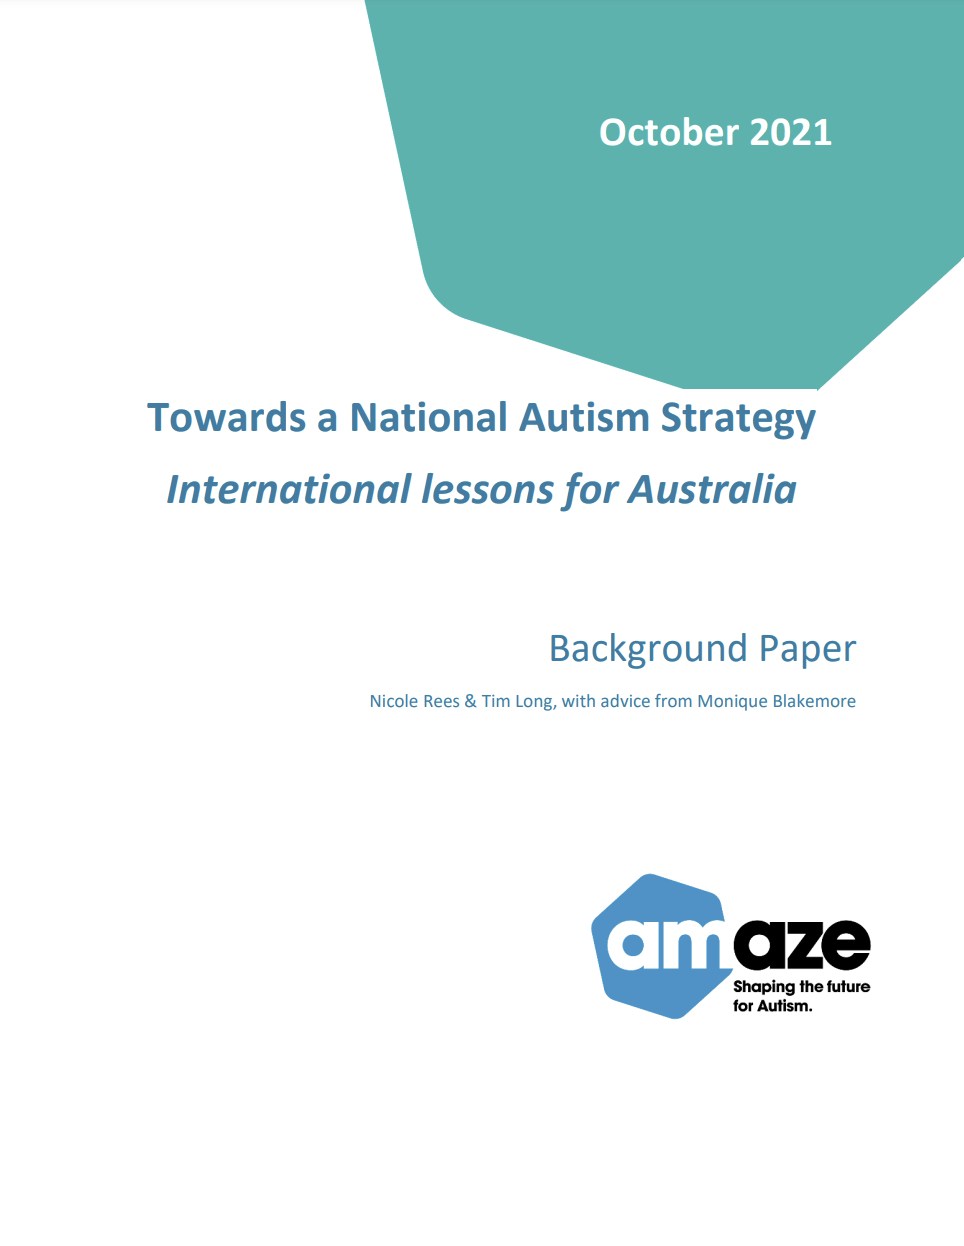 [Australie] “Towards a National Autism Strategy – International lessons for Australia” (Amaze.org.au, 2021)